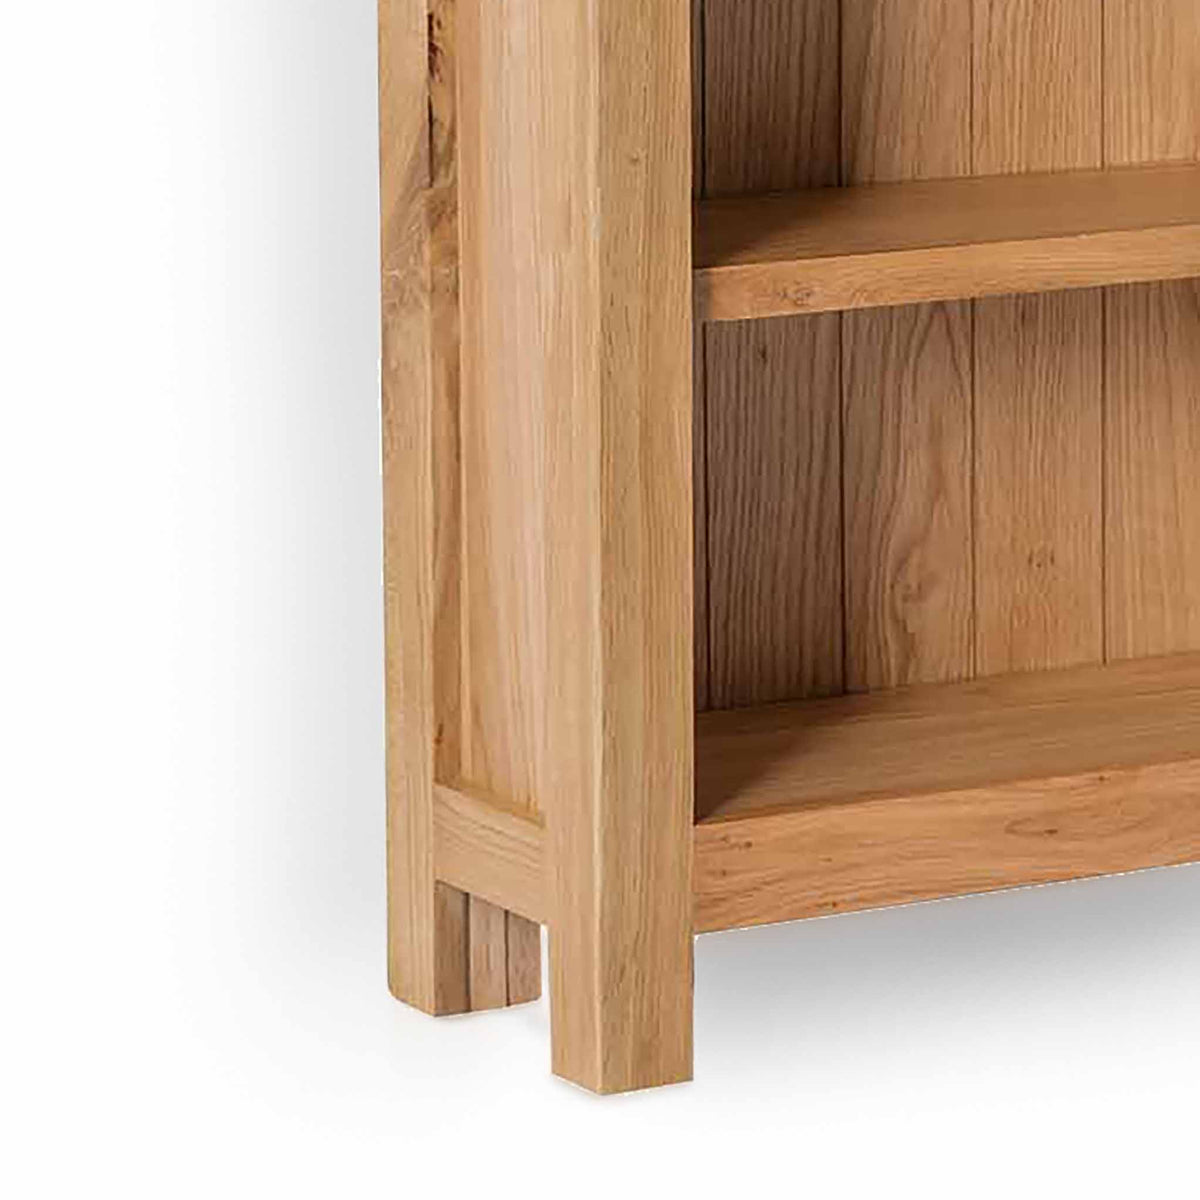 London Oak Slim Bookcase - Close up of bottom shelf and feet of bookcase